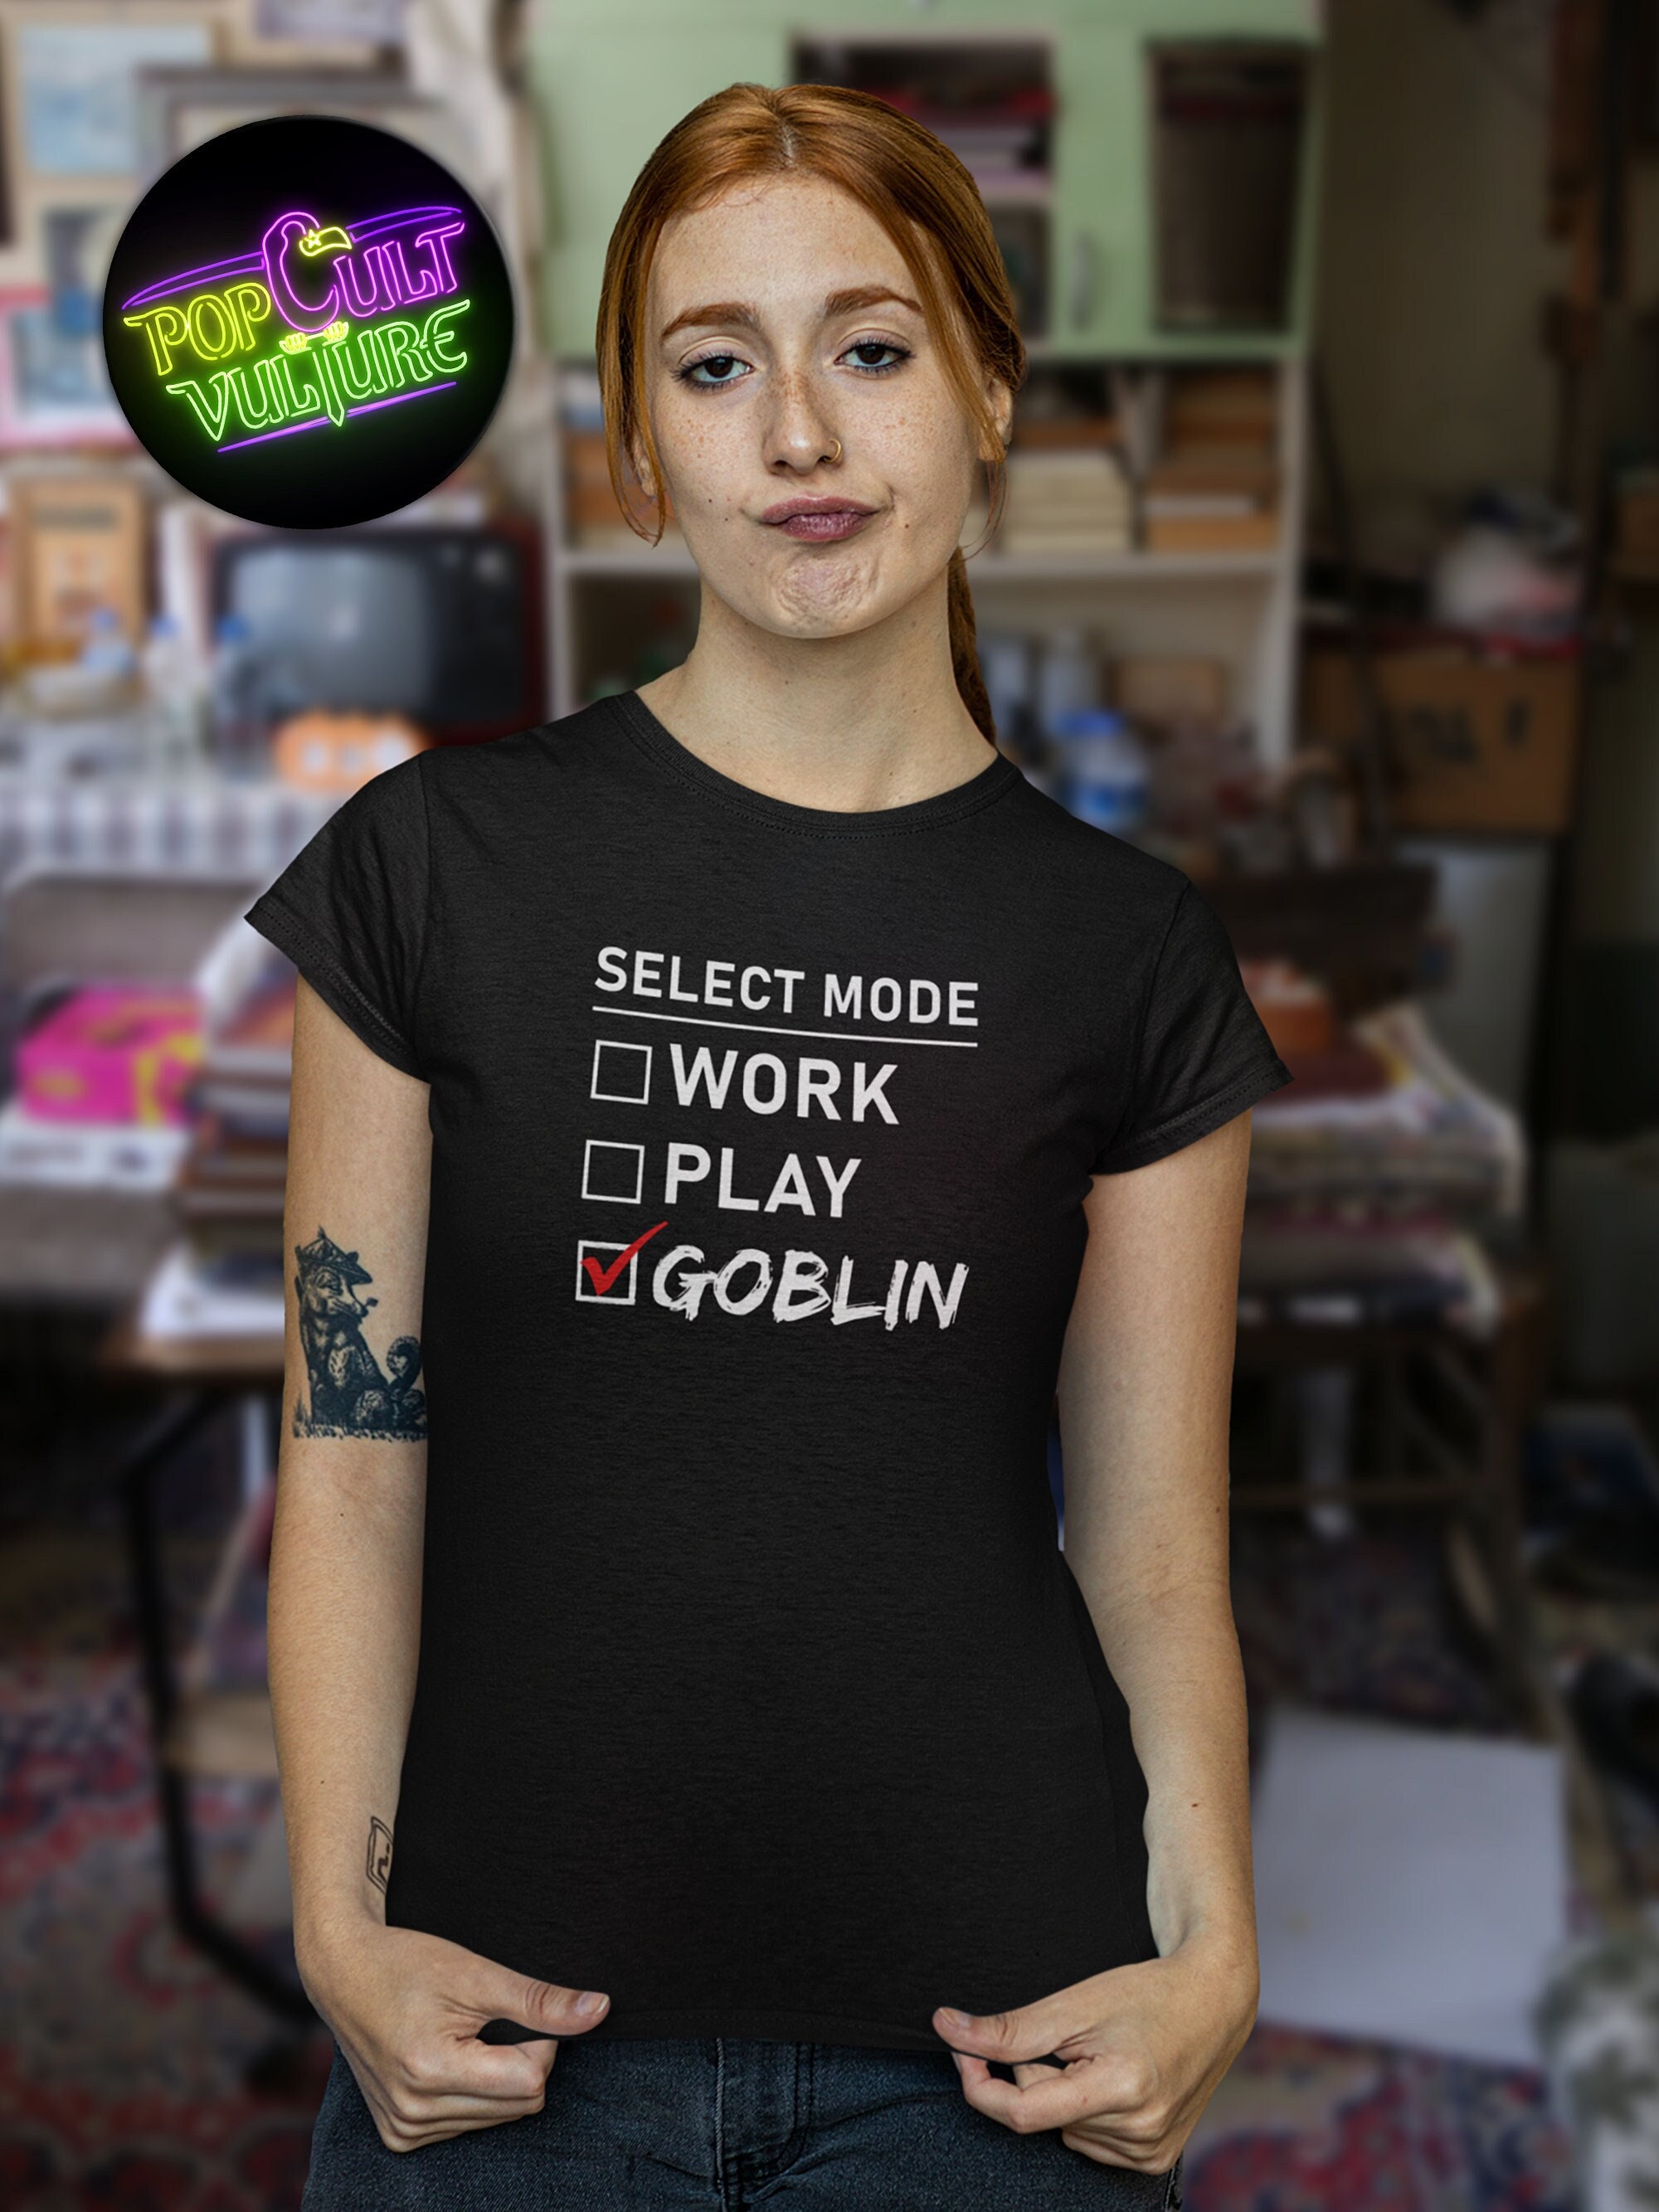 Serie van Kwijtschelding Beukende Goblin Mode T-shirt Select Mode Black Short Sleeve Tee - Etsy